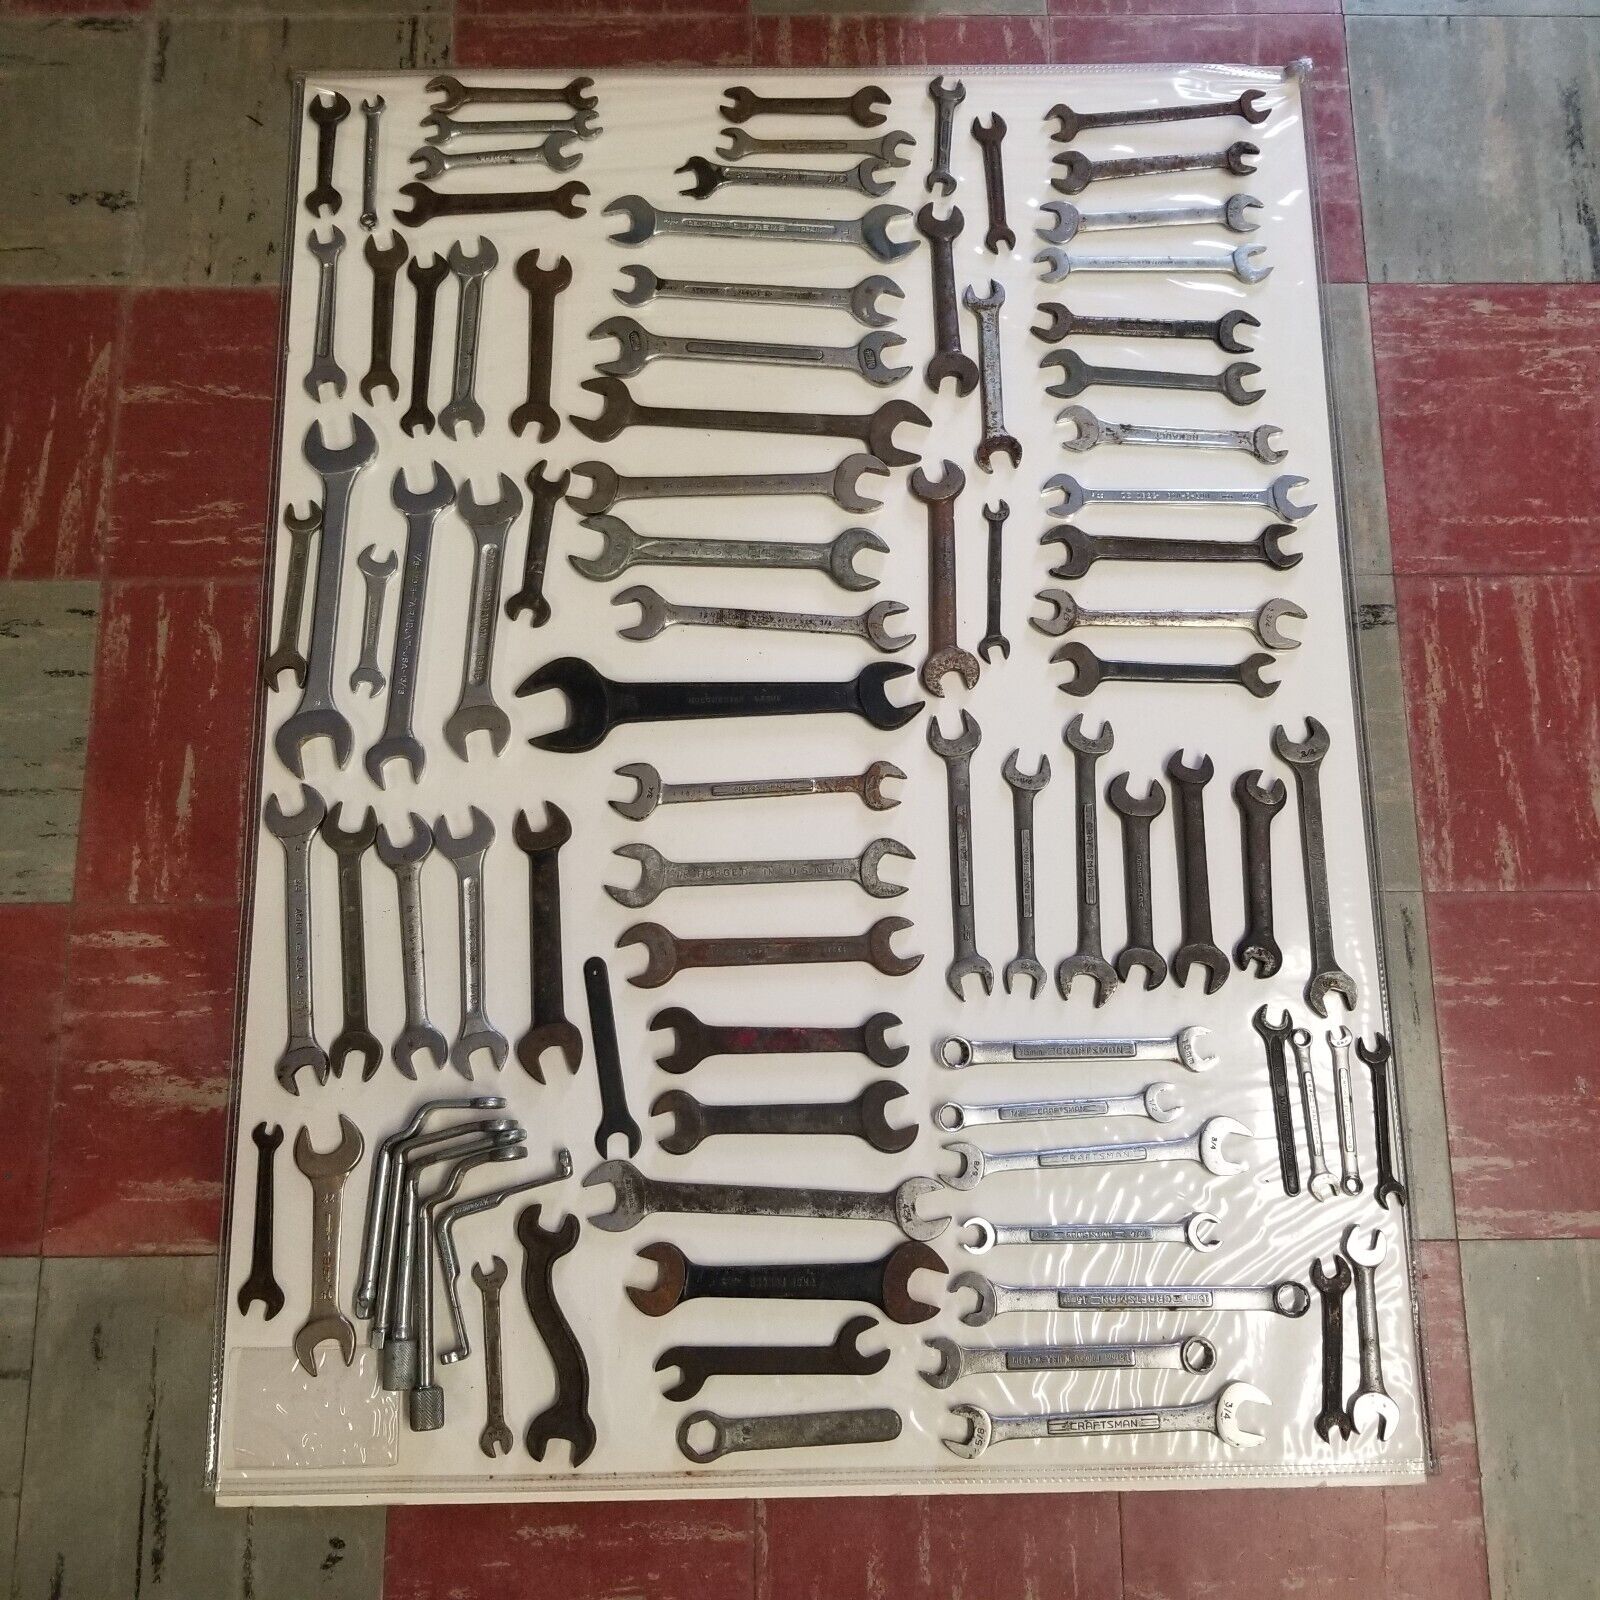 Vintage Wrench Lot of 85+, Craftsman, Thorsen, Bonney, Wards, Remault, LOOK